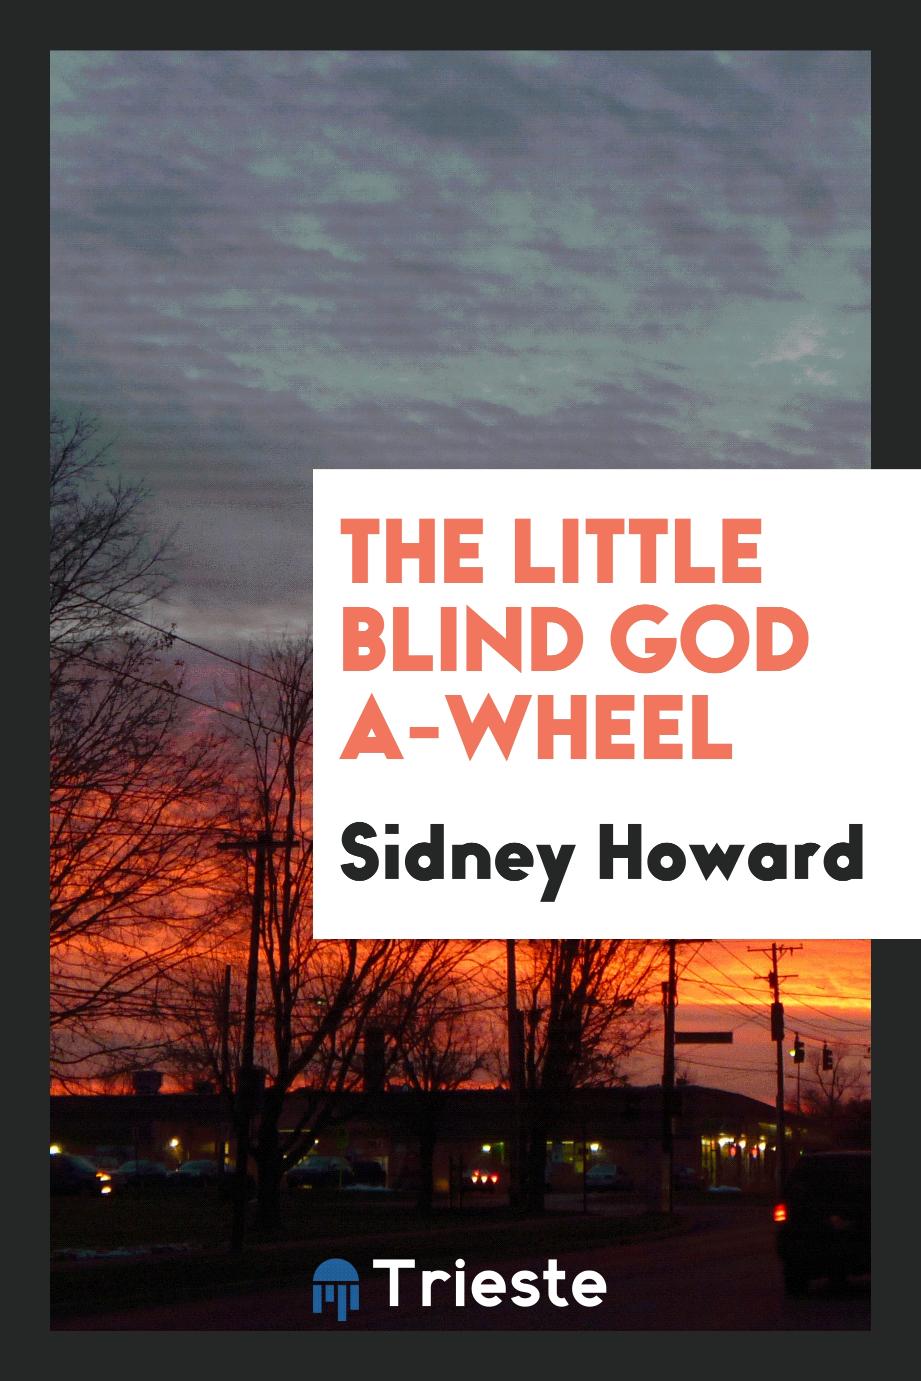 The Little Blind God A-Wheel